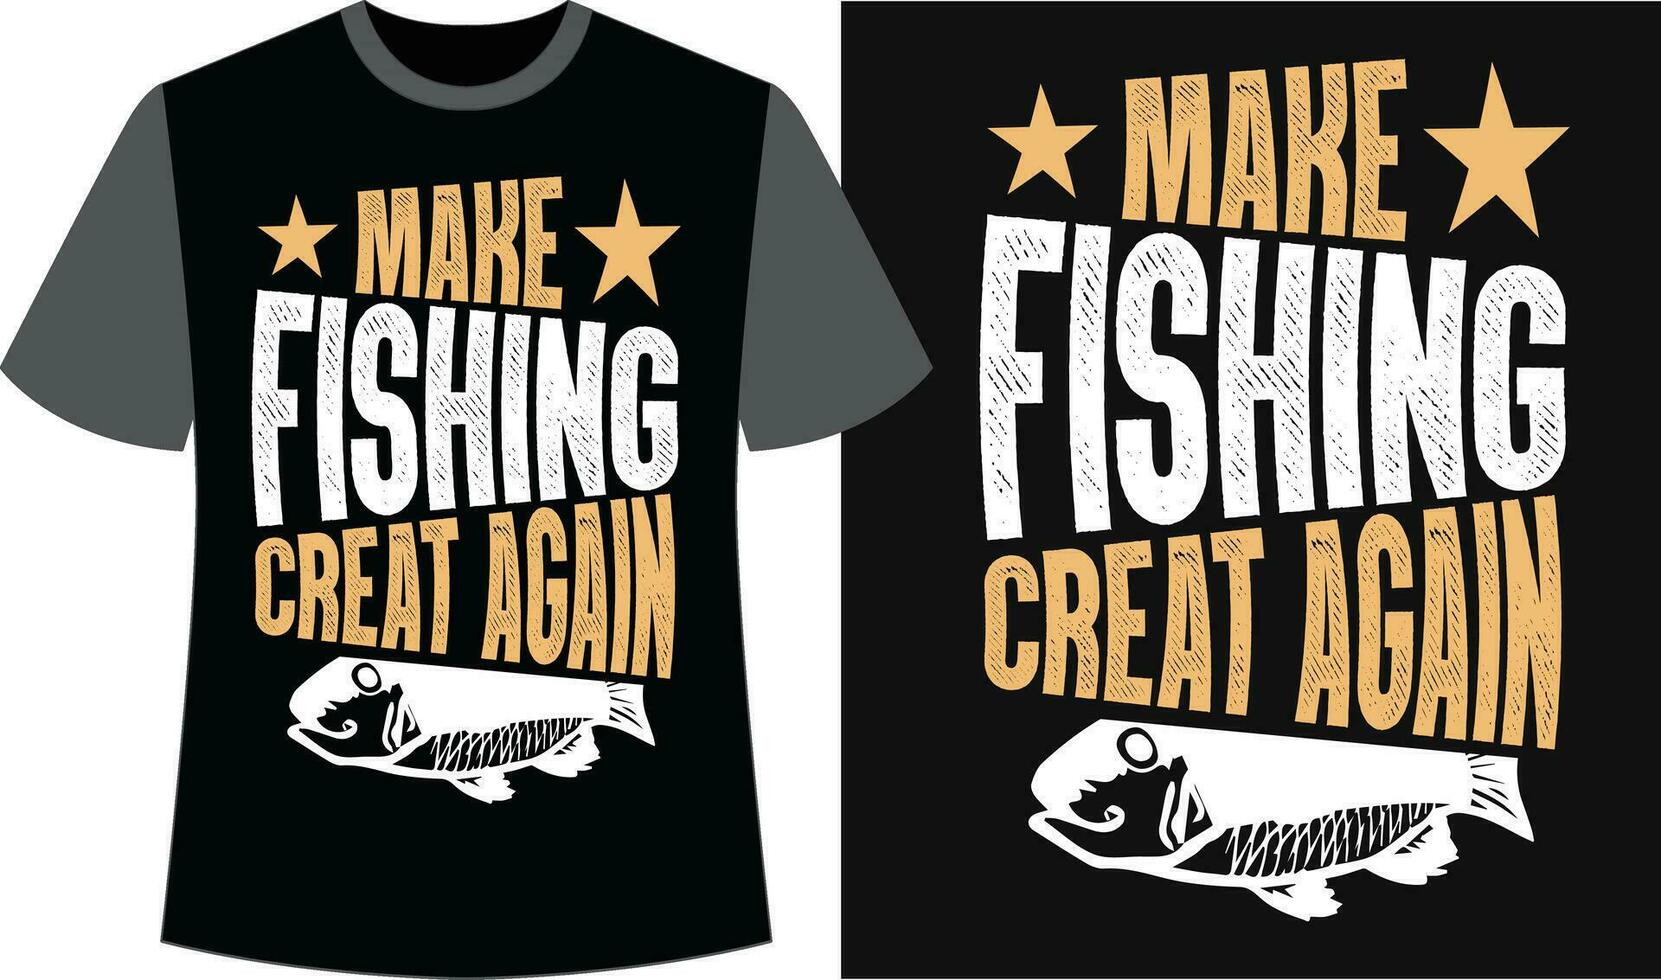 pescaria tipografia camiseta Projeto. pescaria vetor gráficos